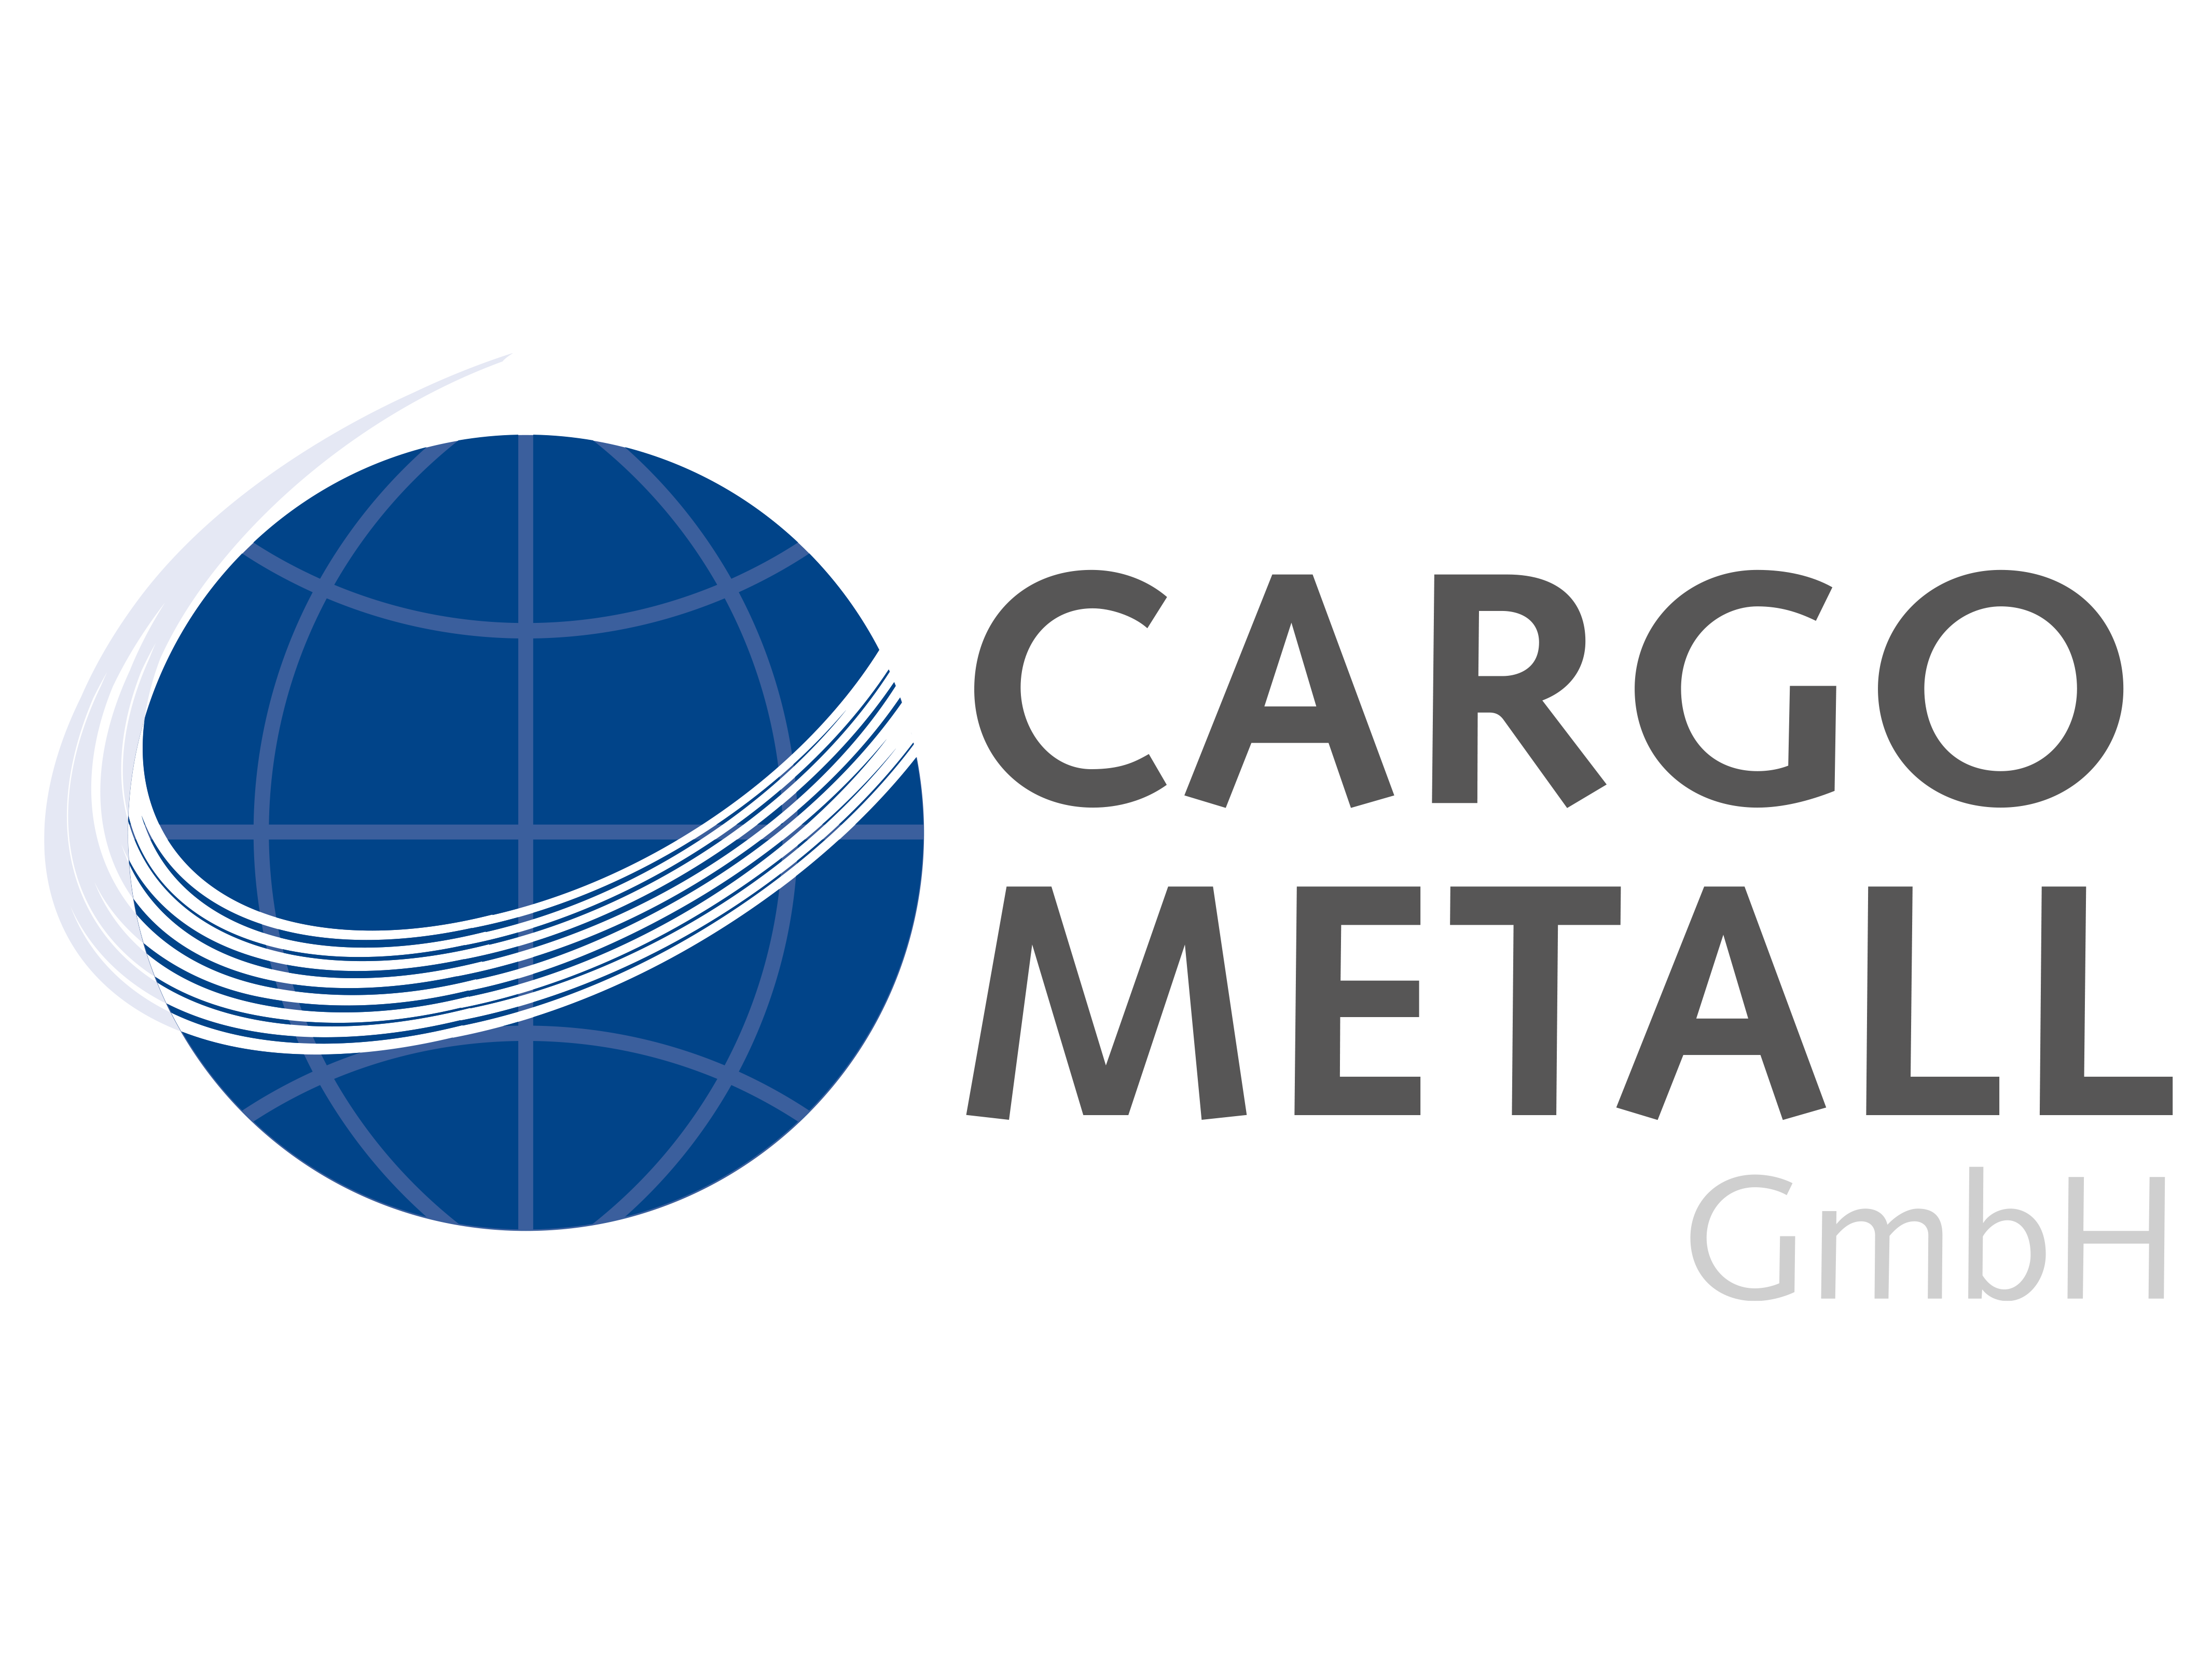 CARGO-METALL GmbH